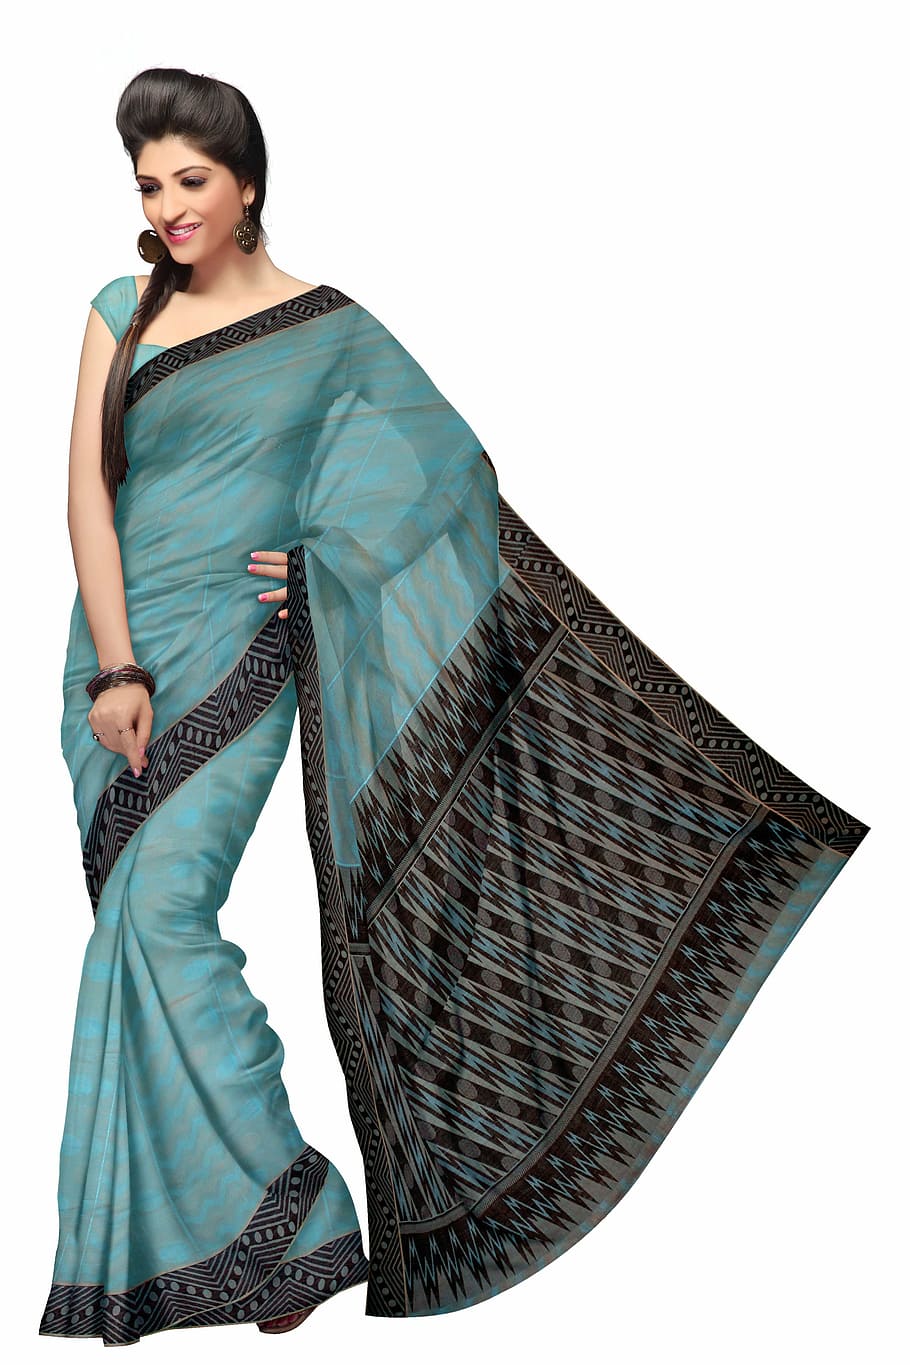 woman wearing teal and black sari dress, fashion, silk, model